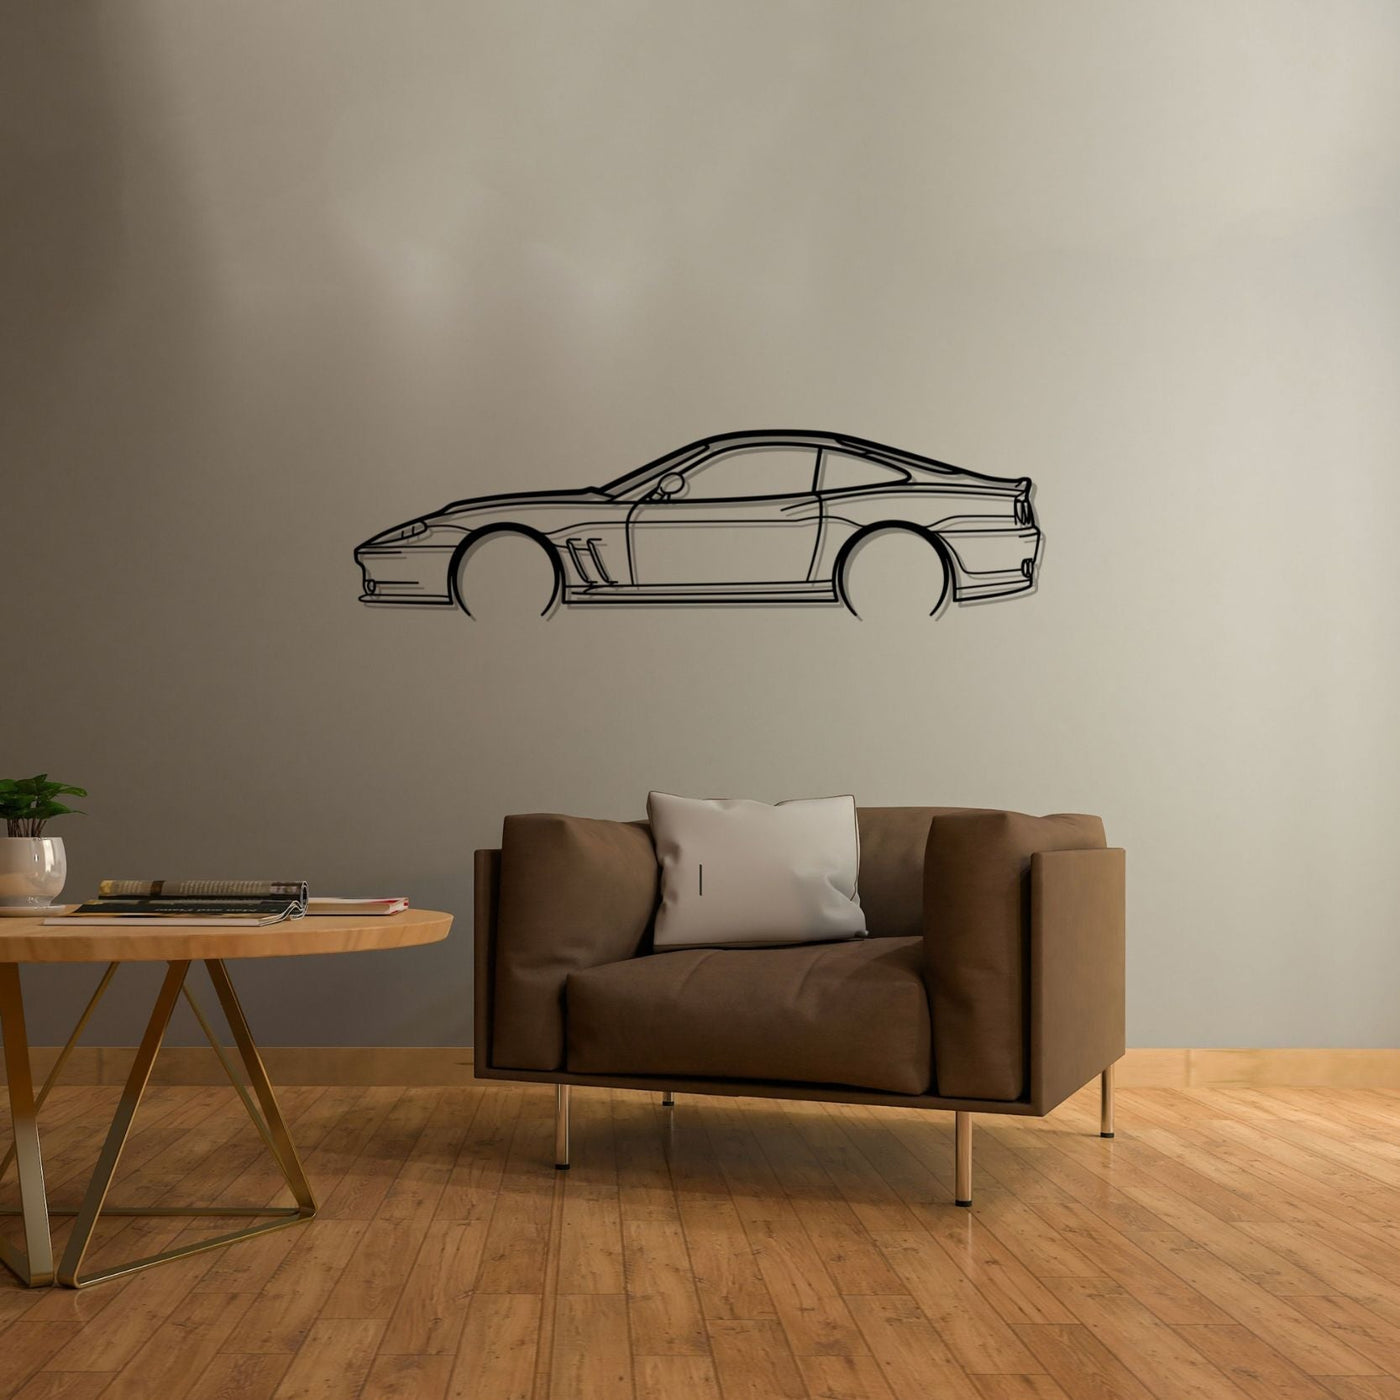 550 Maranello Detailed Silhouette Metal Wall Art